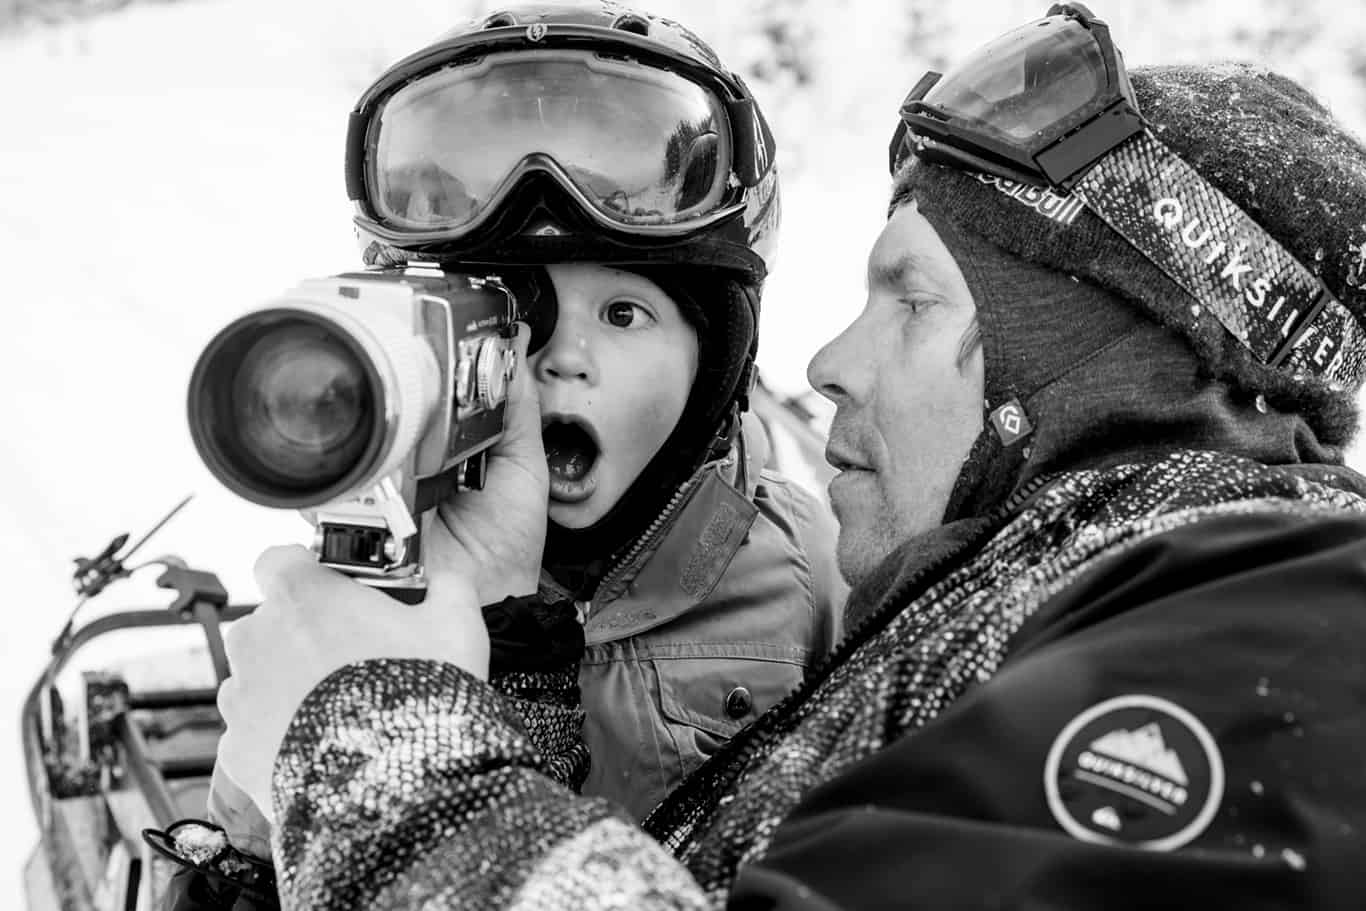 Coastal Lifestyle Magazine, Red Bull Illume - Preserving the Soul of Snowboarding